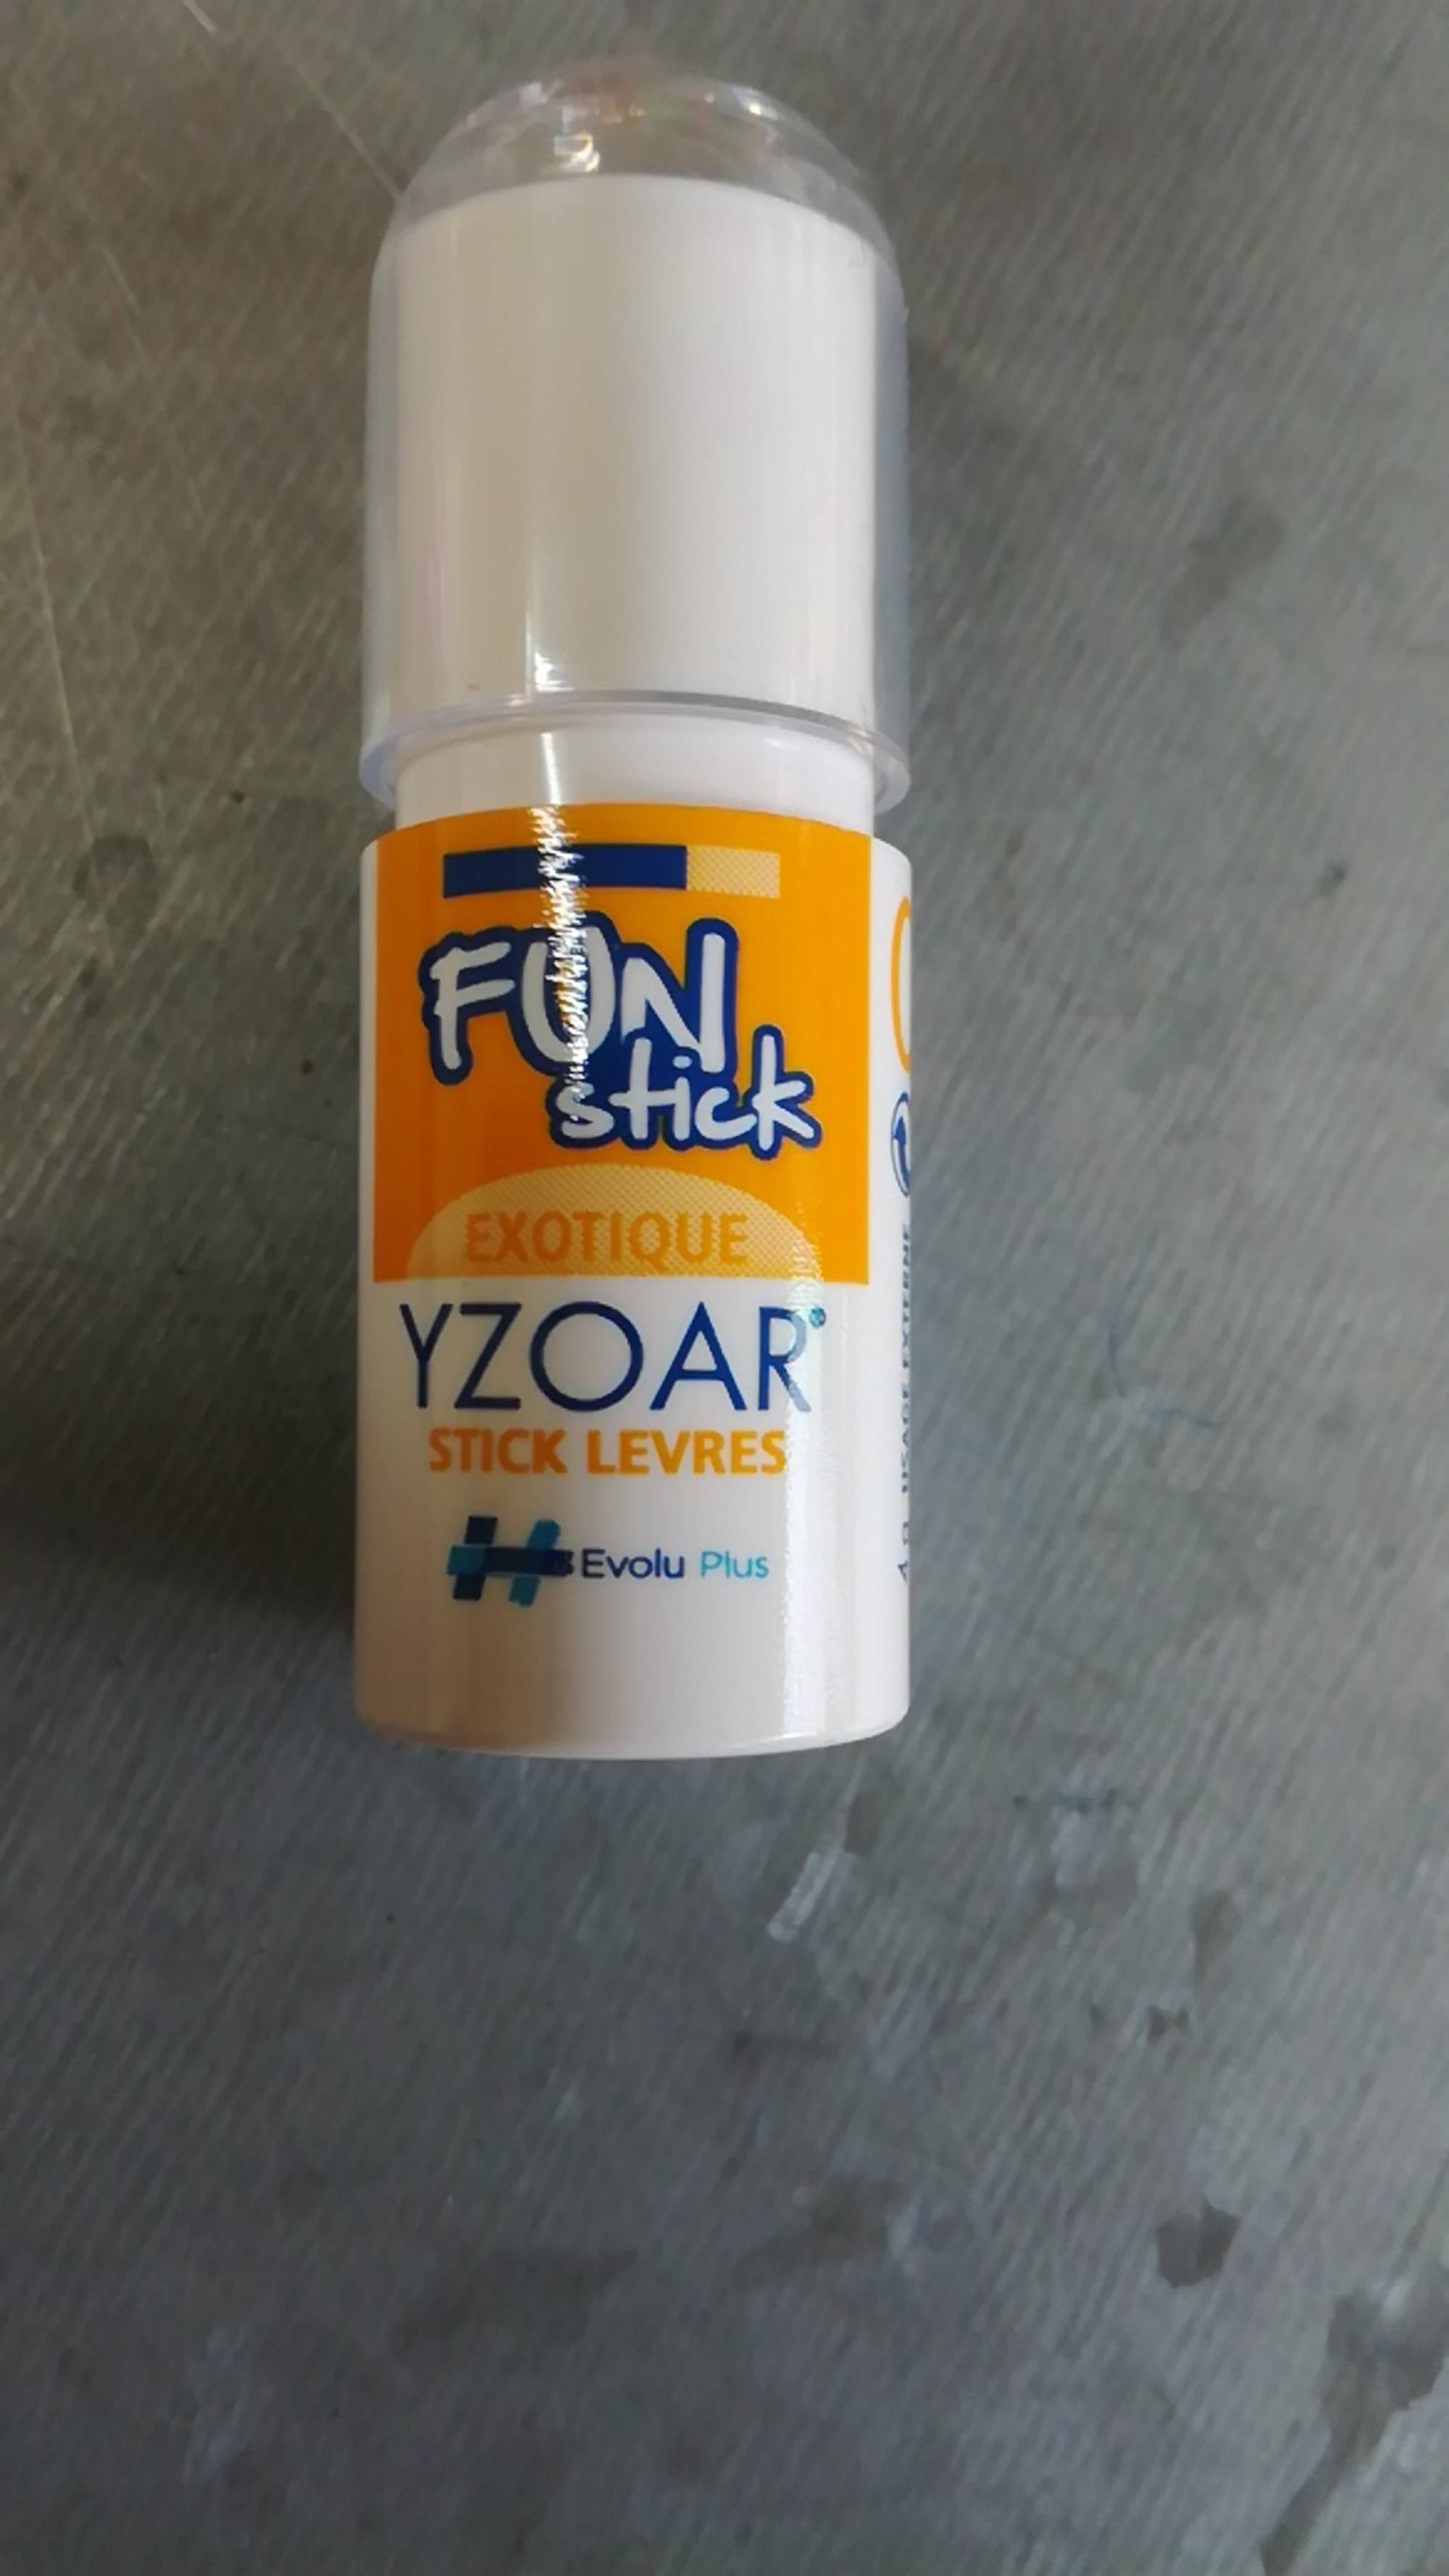 YZOAR - Fun stick - Stick lèvres exotique